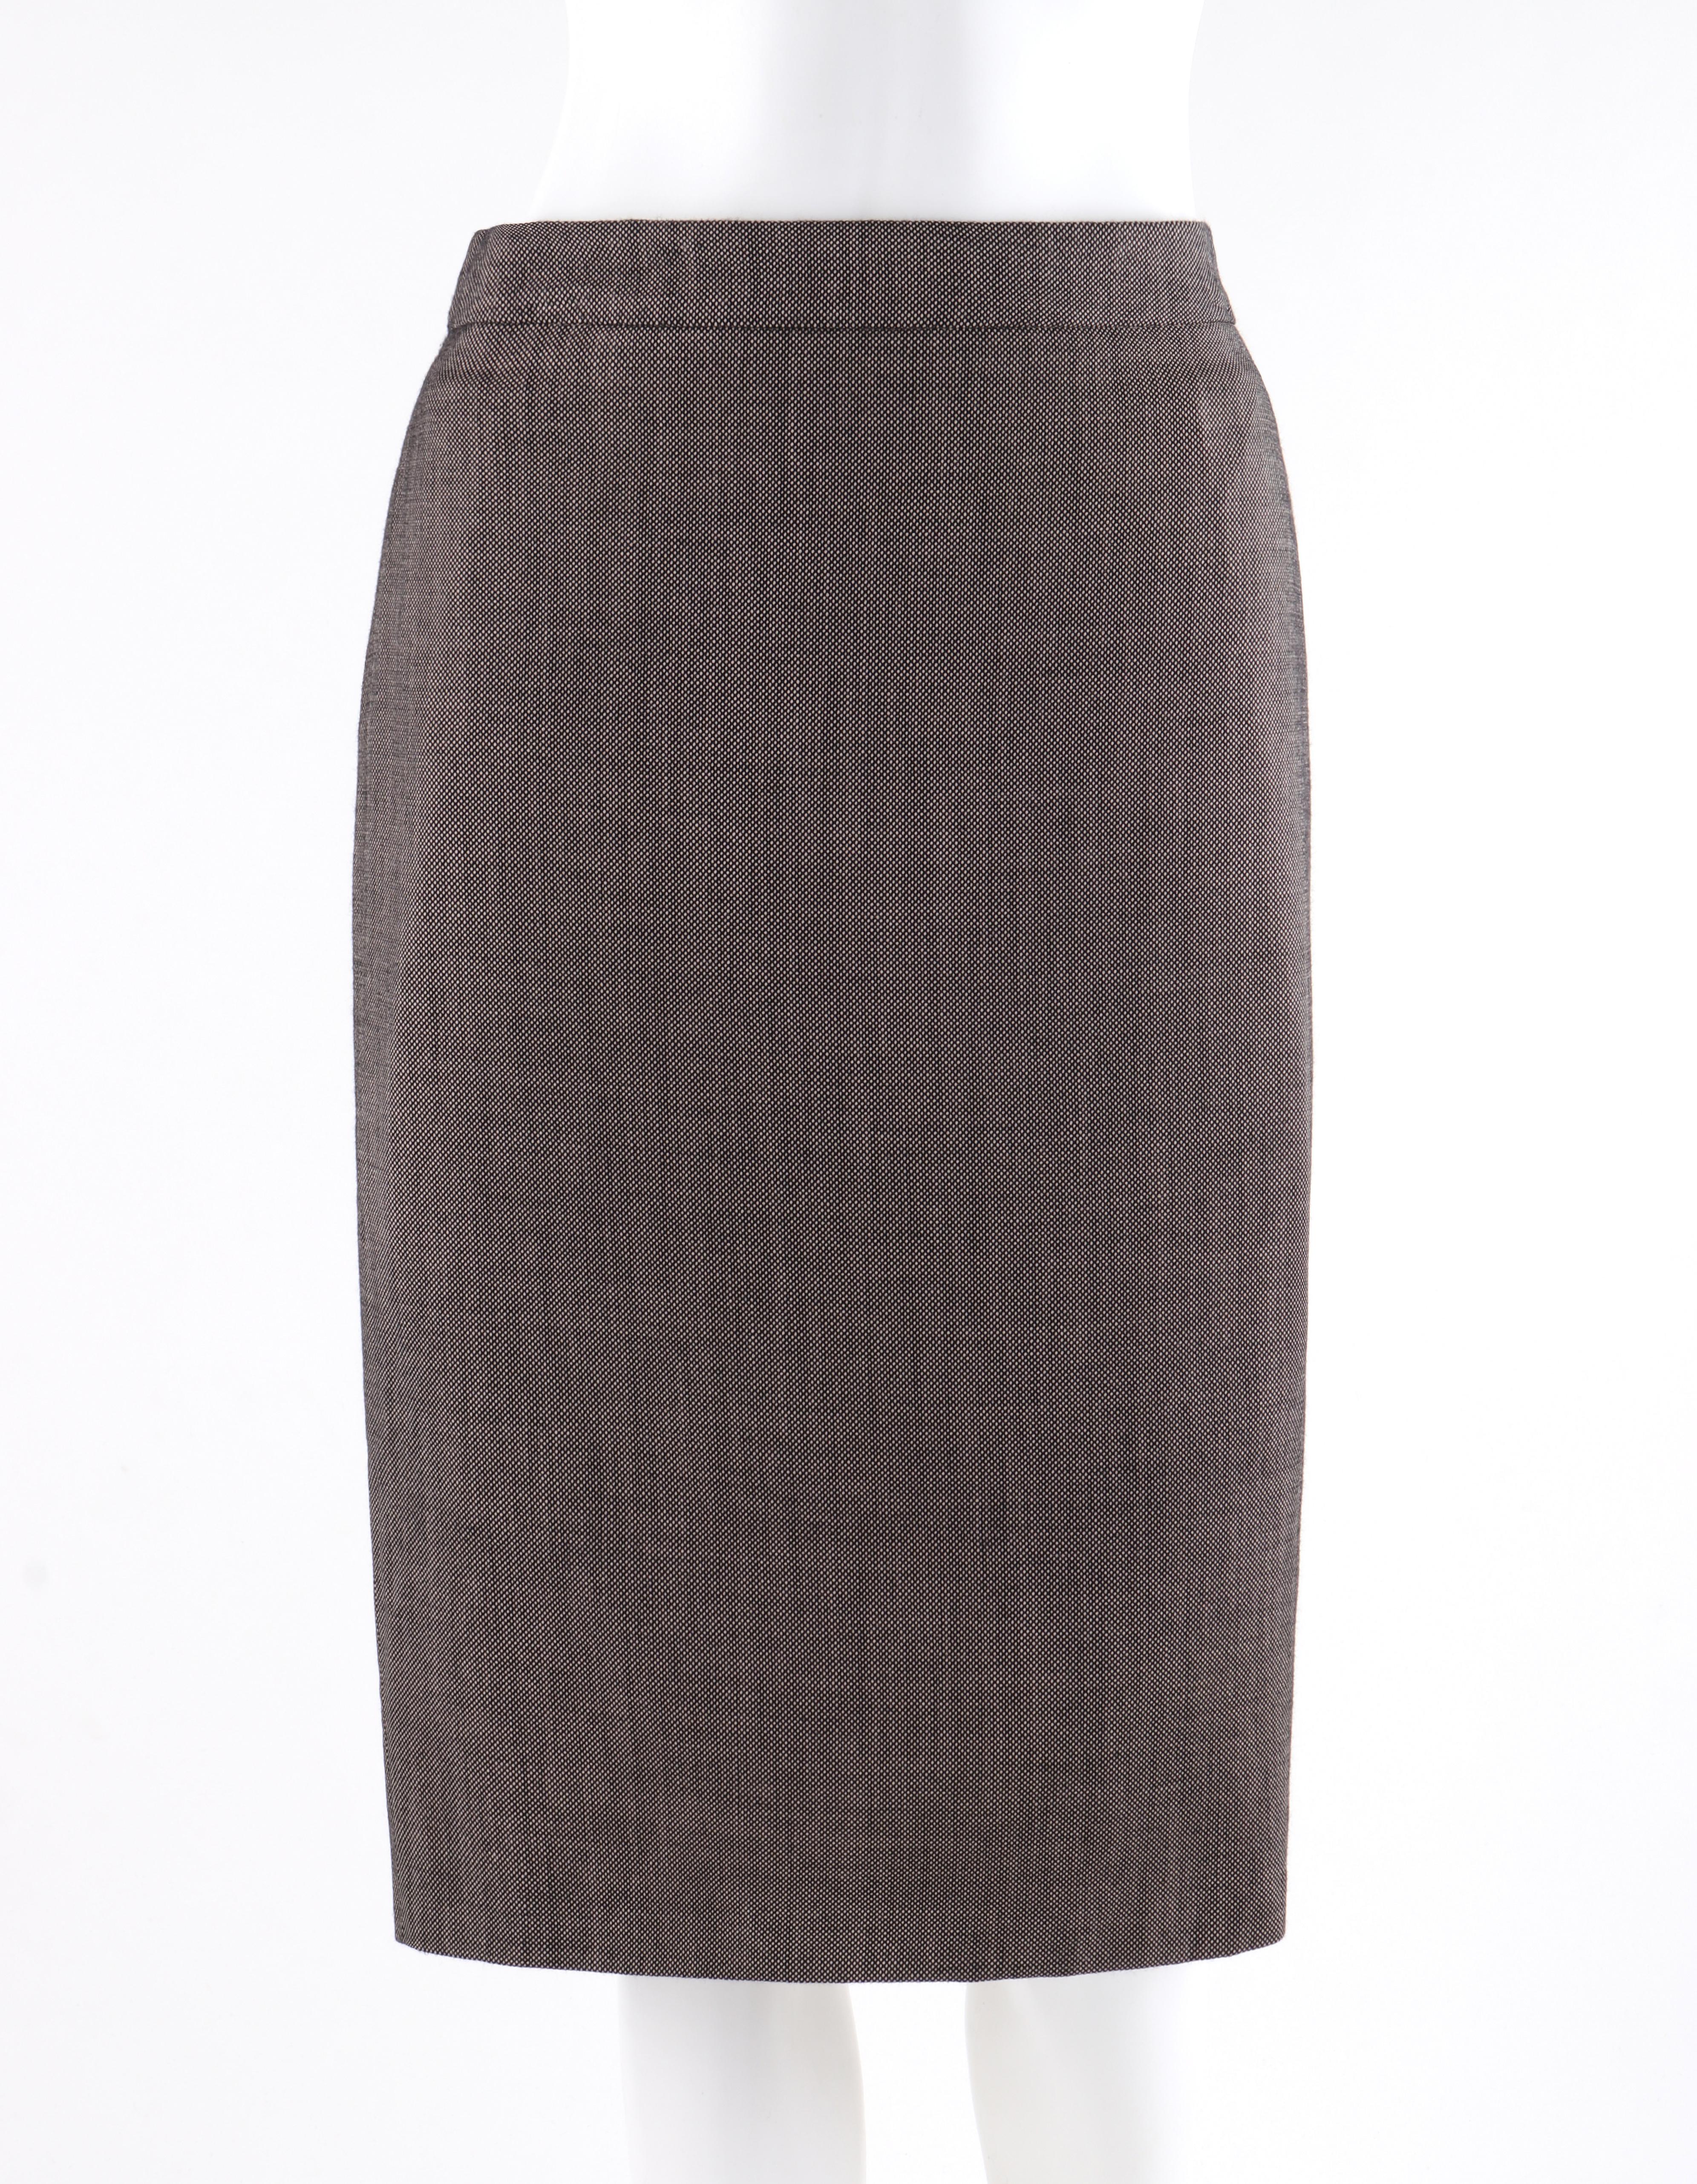  ALEXANDER McQUEEN A/W 1998 “Joan” 2 pc. Removable Collar Blazer Skirt Suit Set For Sale 1